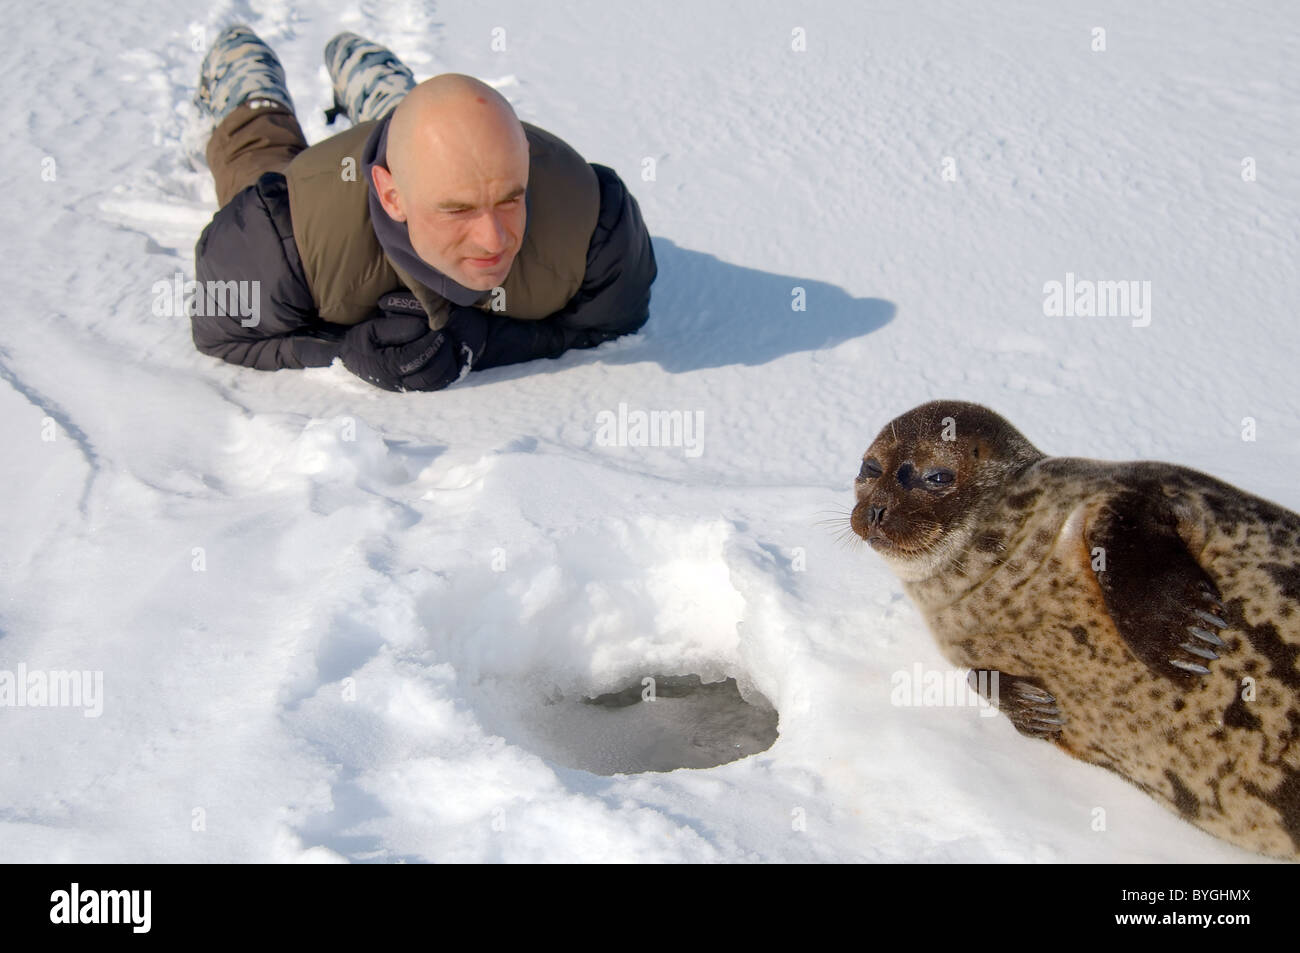 Man lies on the snow and looks at Ringed seal near ice-hole. Jar seal, netsik or nattiq (Pusa hispida), White Sea, Arctic, Russia Stock Photo